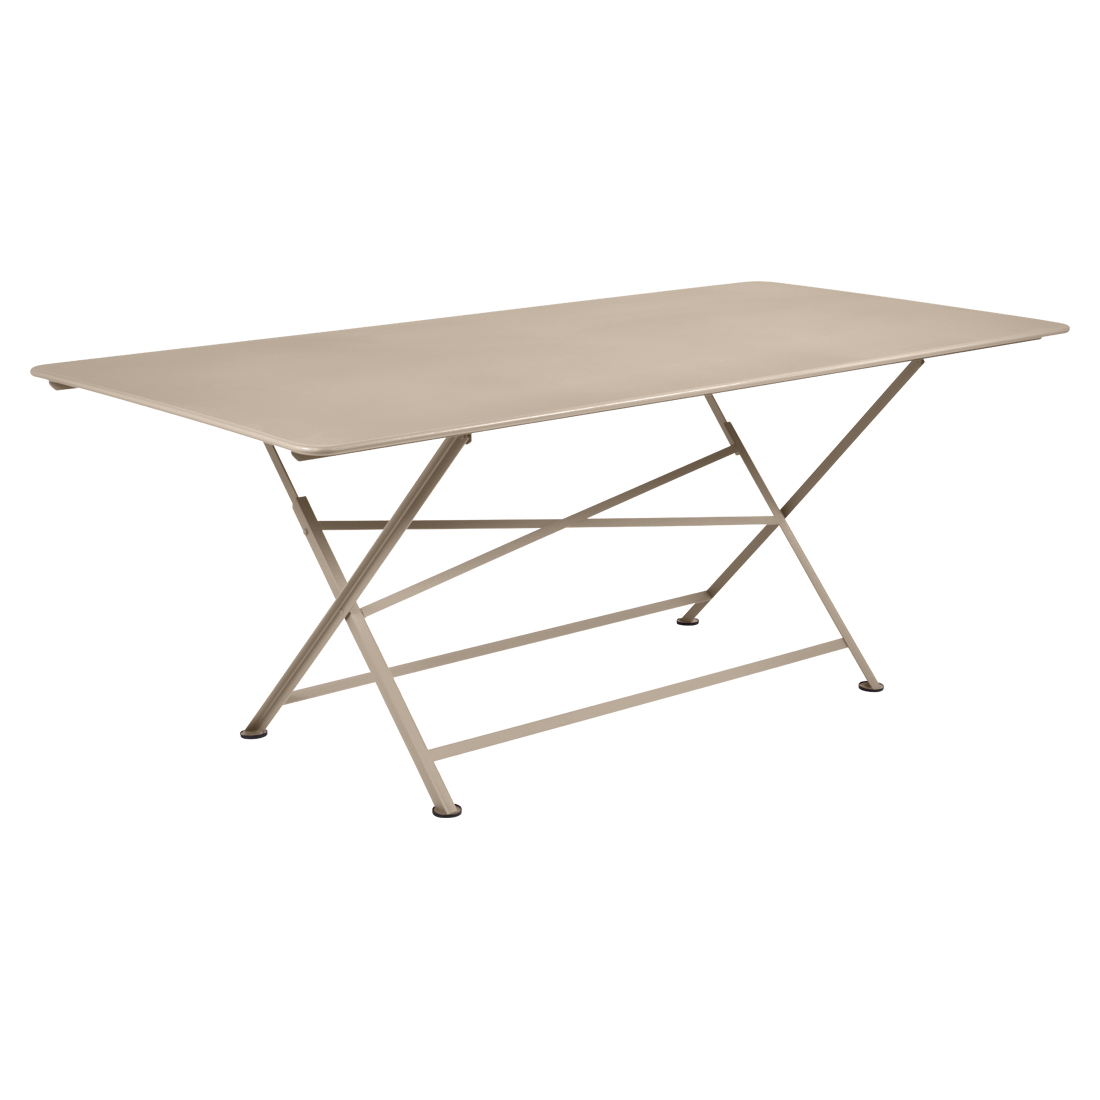 table de jardin, table metal, table de jardin pliante, table metal pliante, table fermob beige